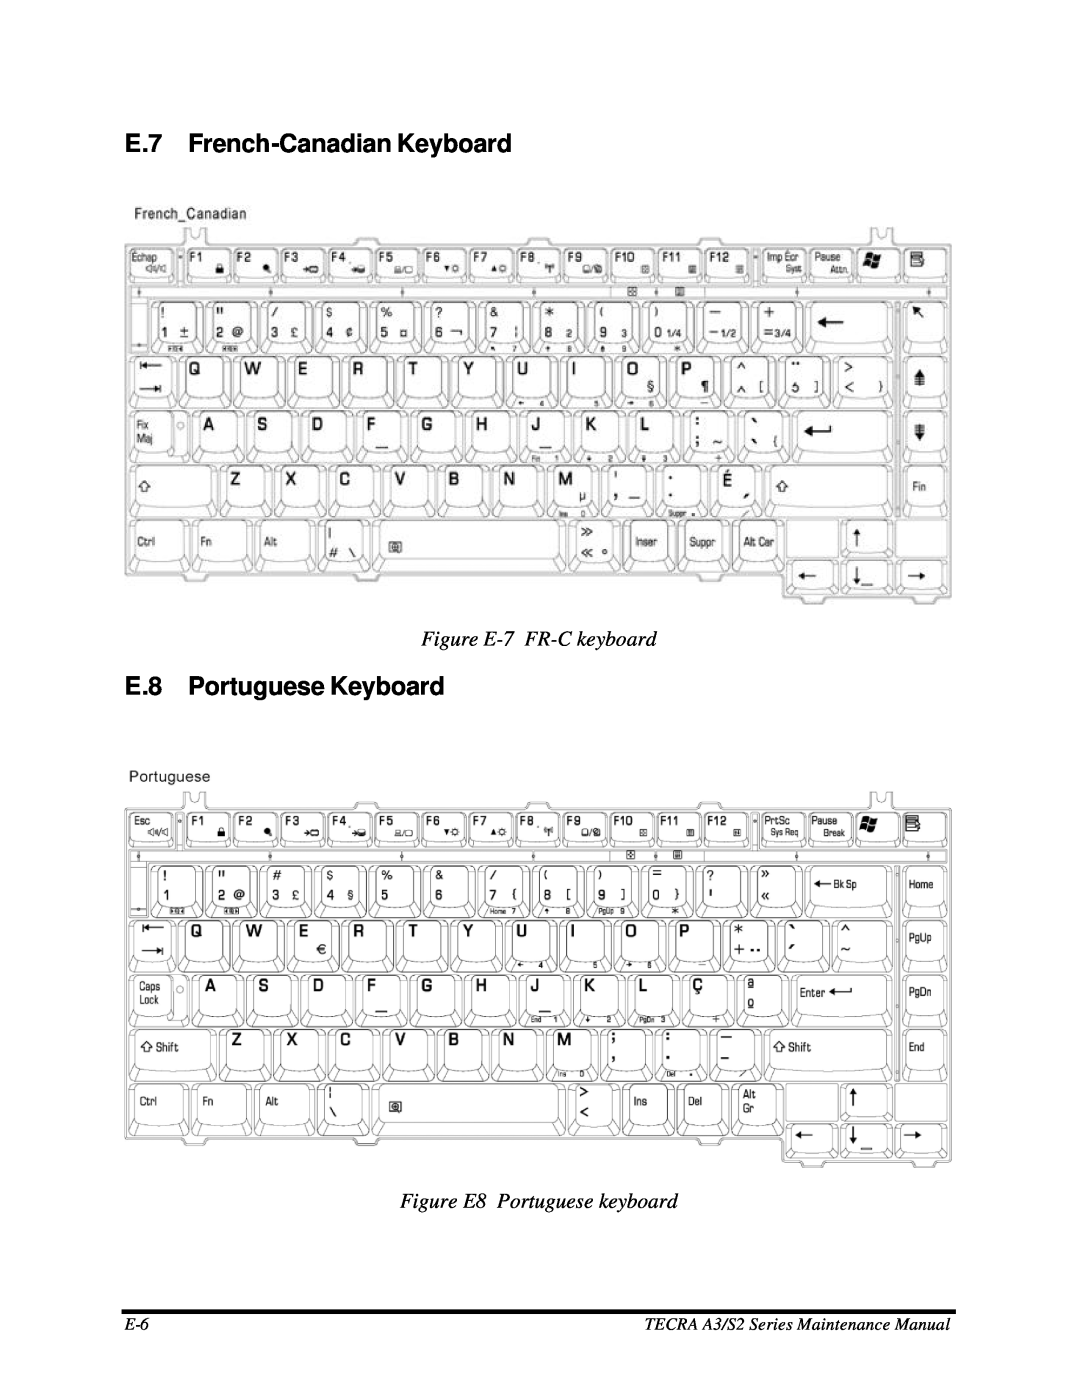 Toshiba S2 E.7 French-Canadian Keyboard, E.8 Portuguese Keyboard, Figure E-7 FR-C keyboard, Figure E8 Portuguese keyboard 